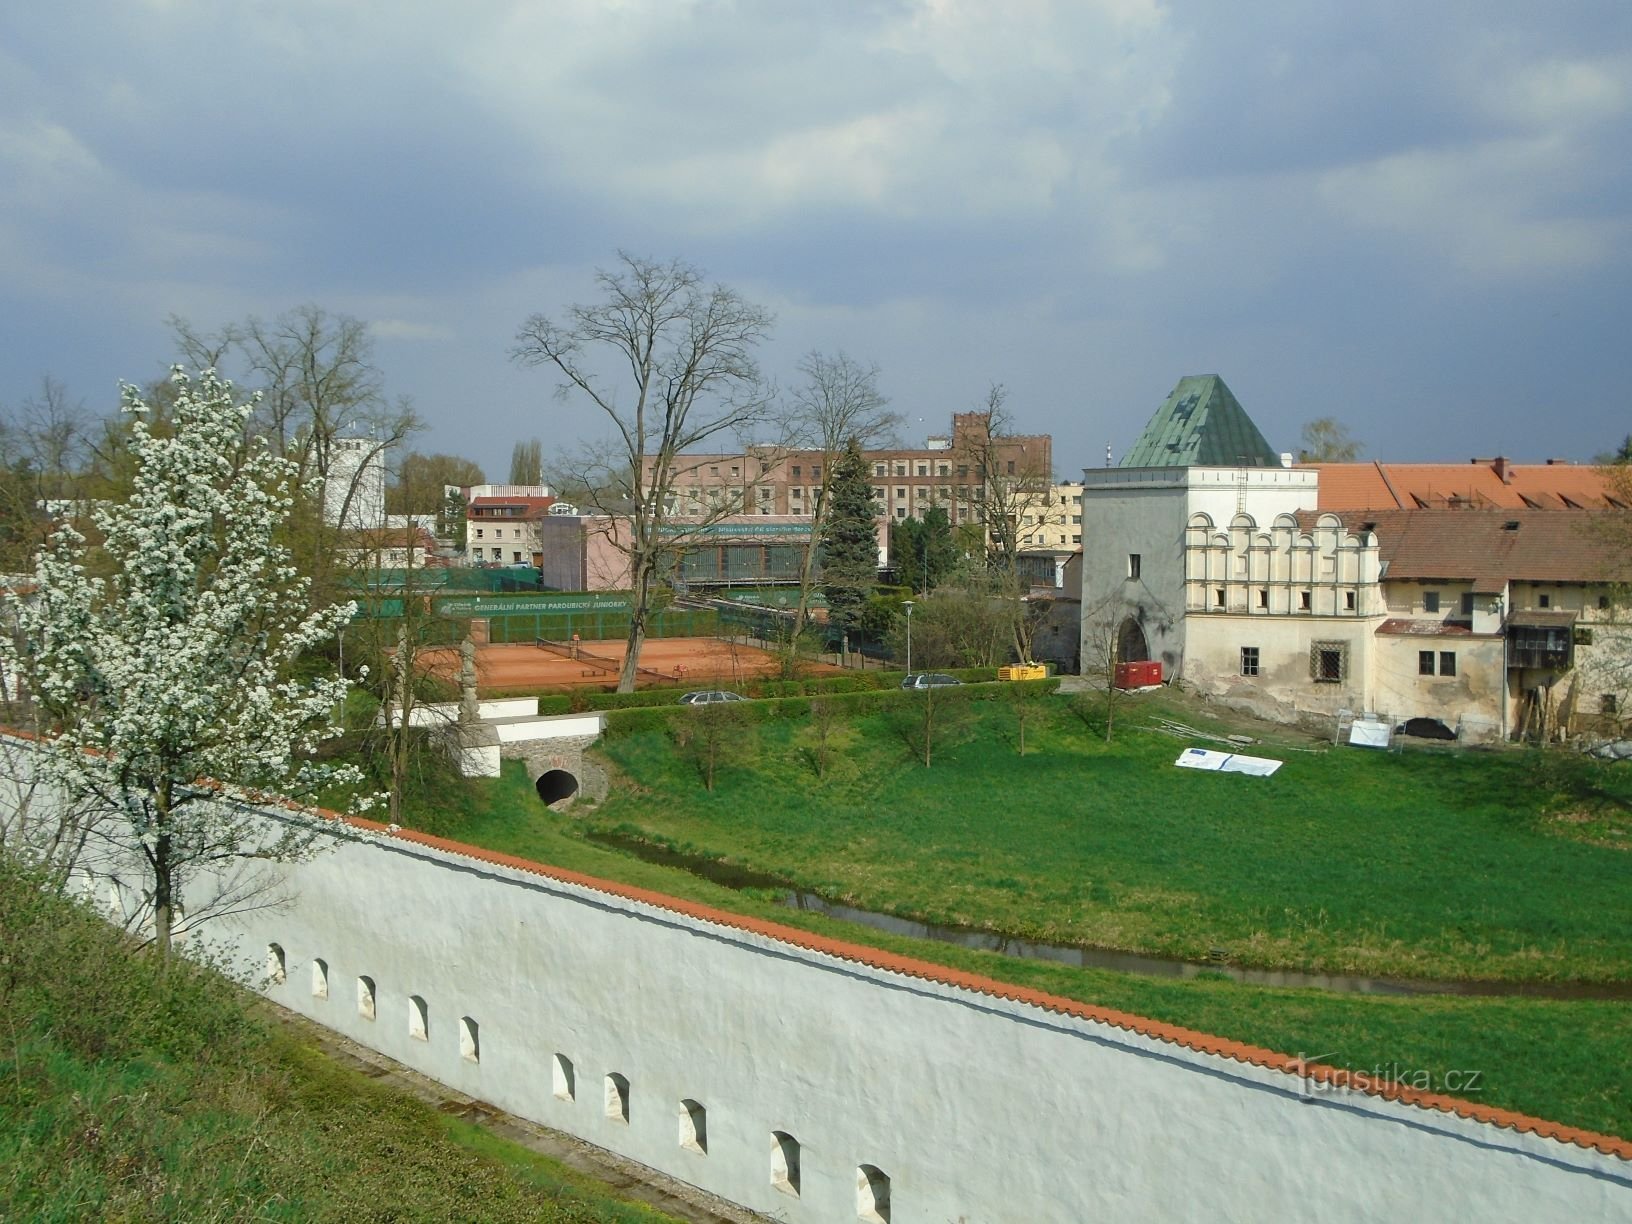 Udsigt over broen mellem slottet og Příhrádek (Pardubice, 17.4.2018/XNUMX/XNUMX)